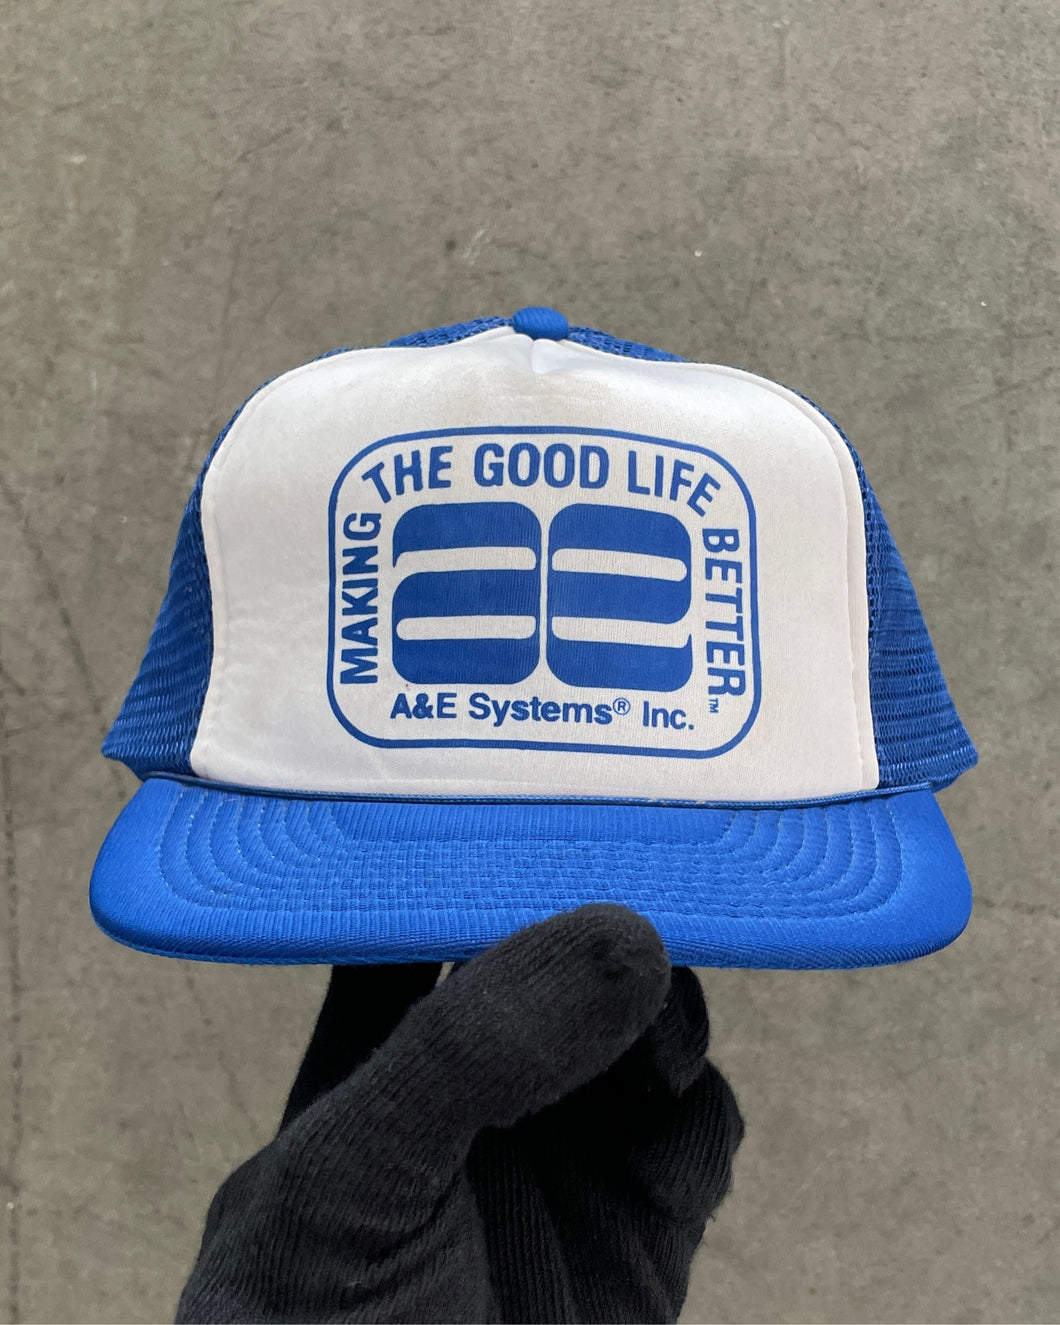 “THE GOOD LIFE” FOAM TRUCKER HAT - 1990S